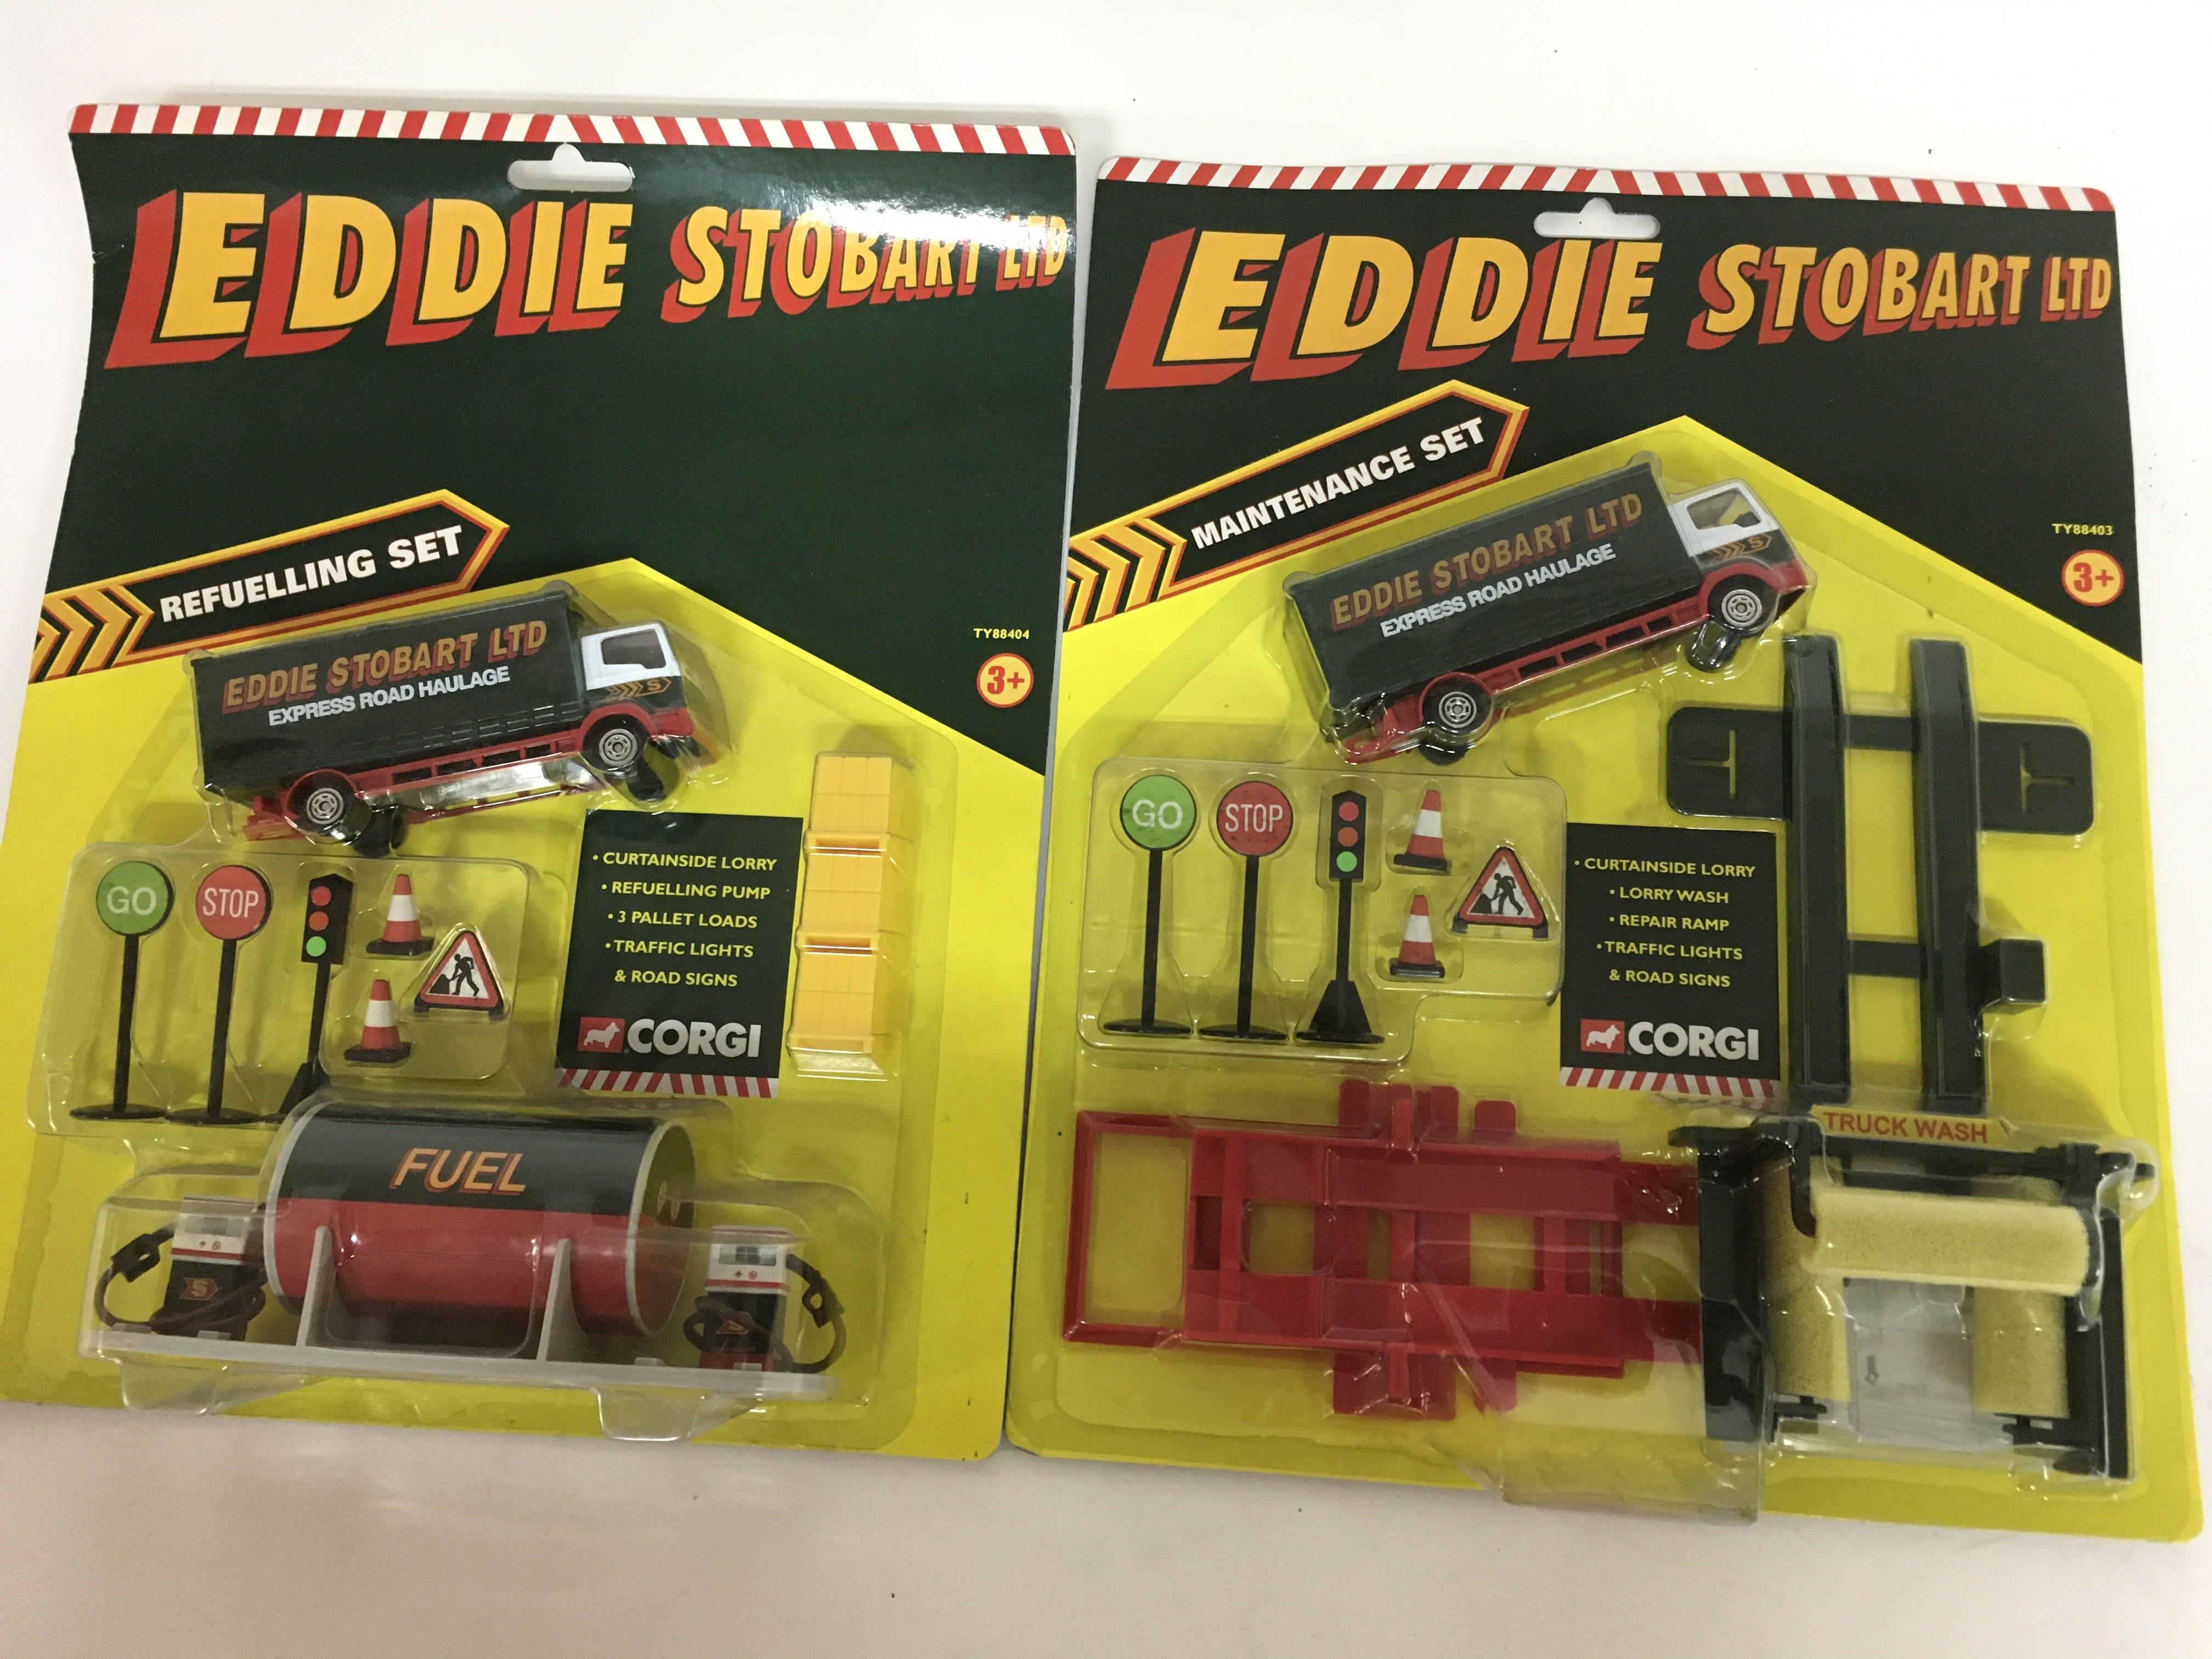 Corgi toys, carded, Eddie Stobart ltd sets x8, inc